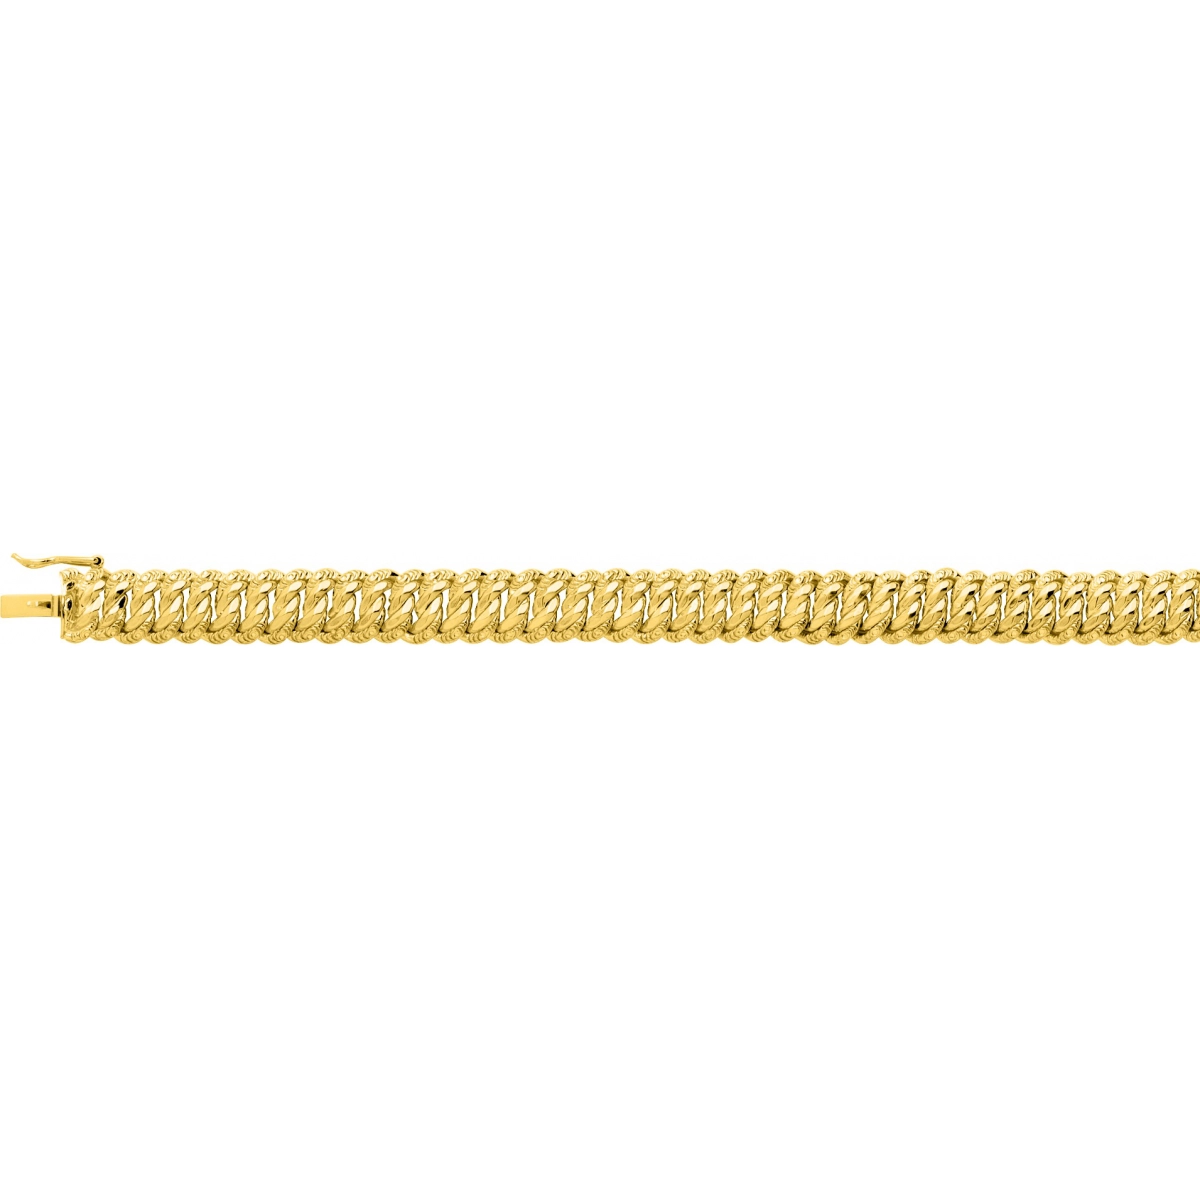 Bracelet gold plated Brass - Size: 18  Lua Blanca  101441B.18